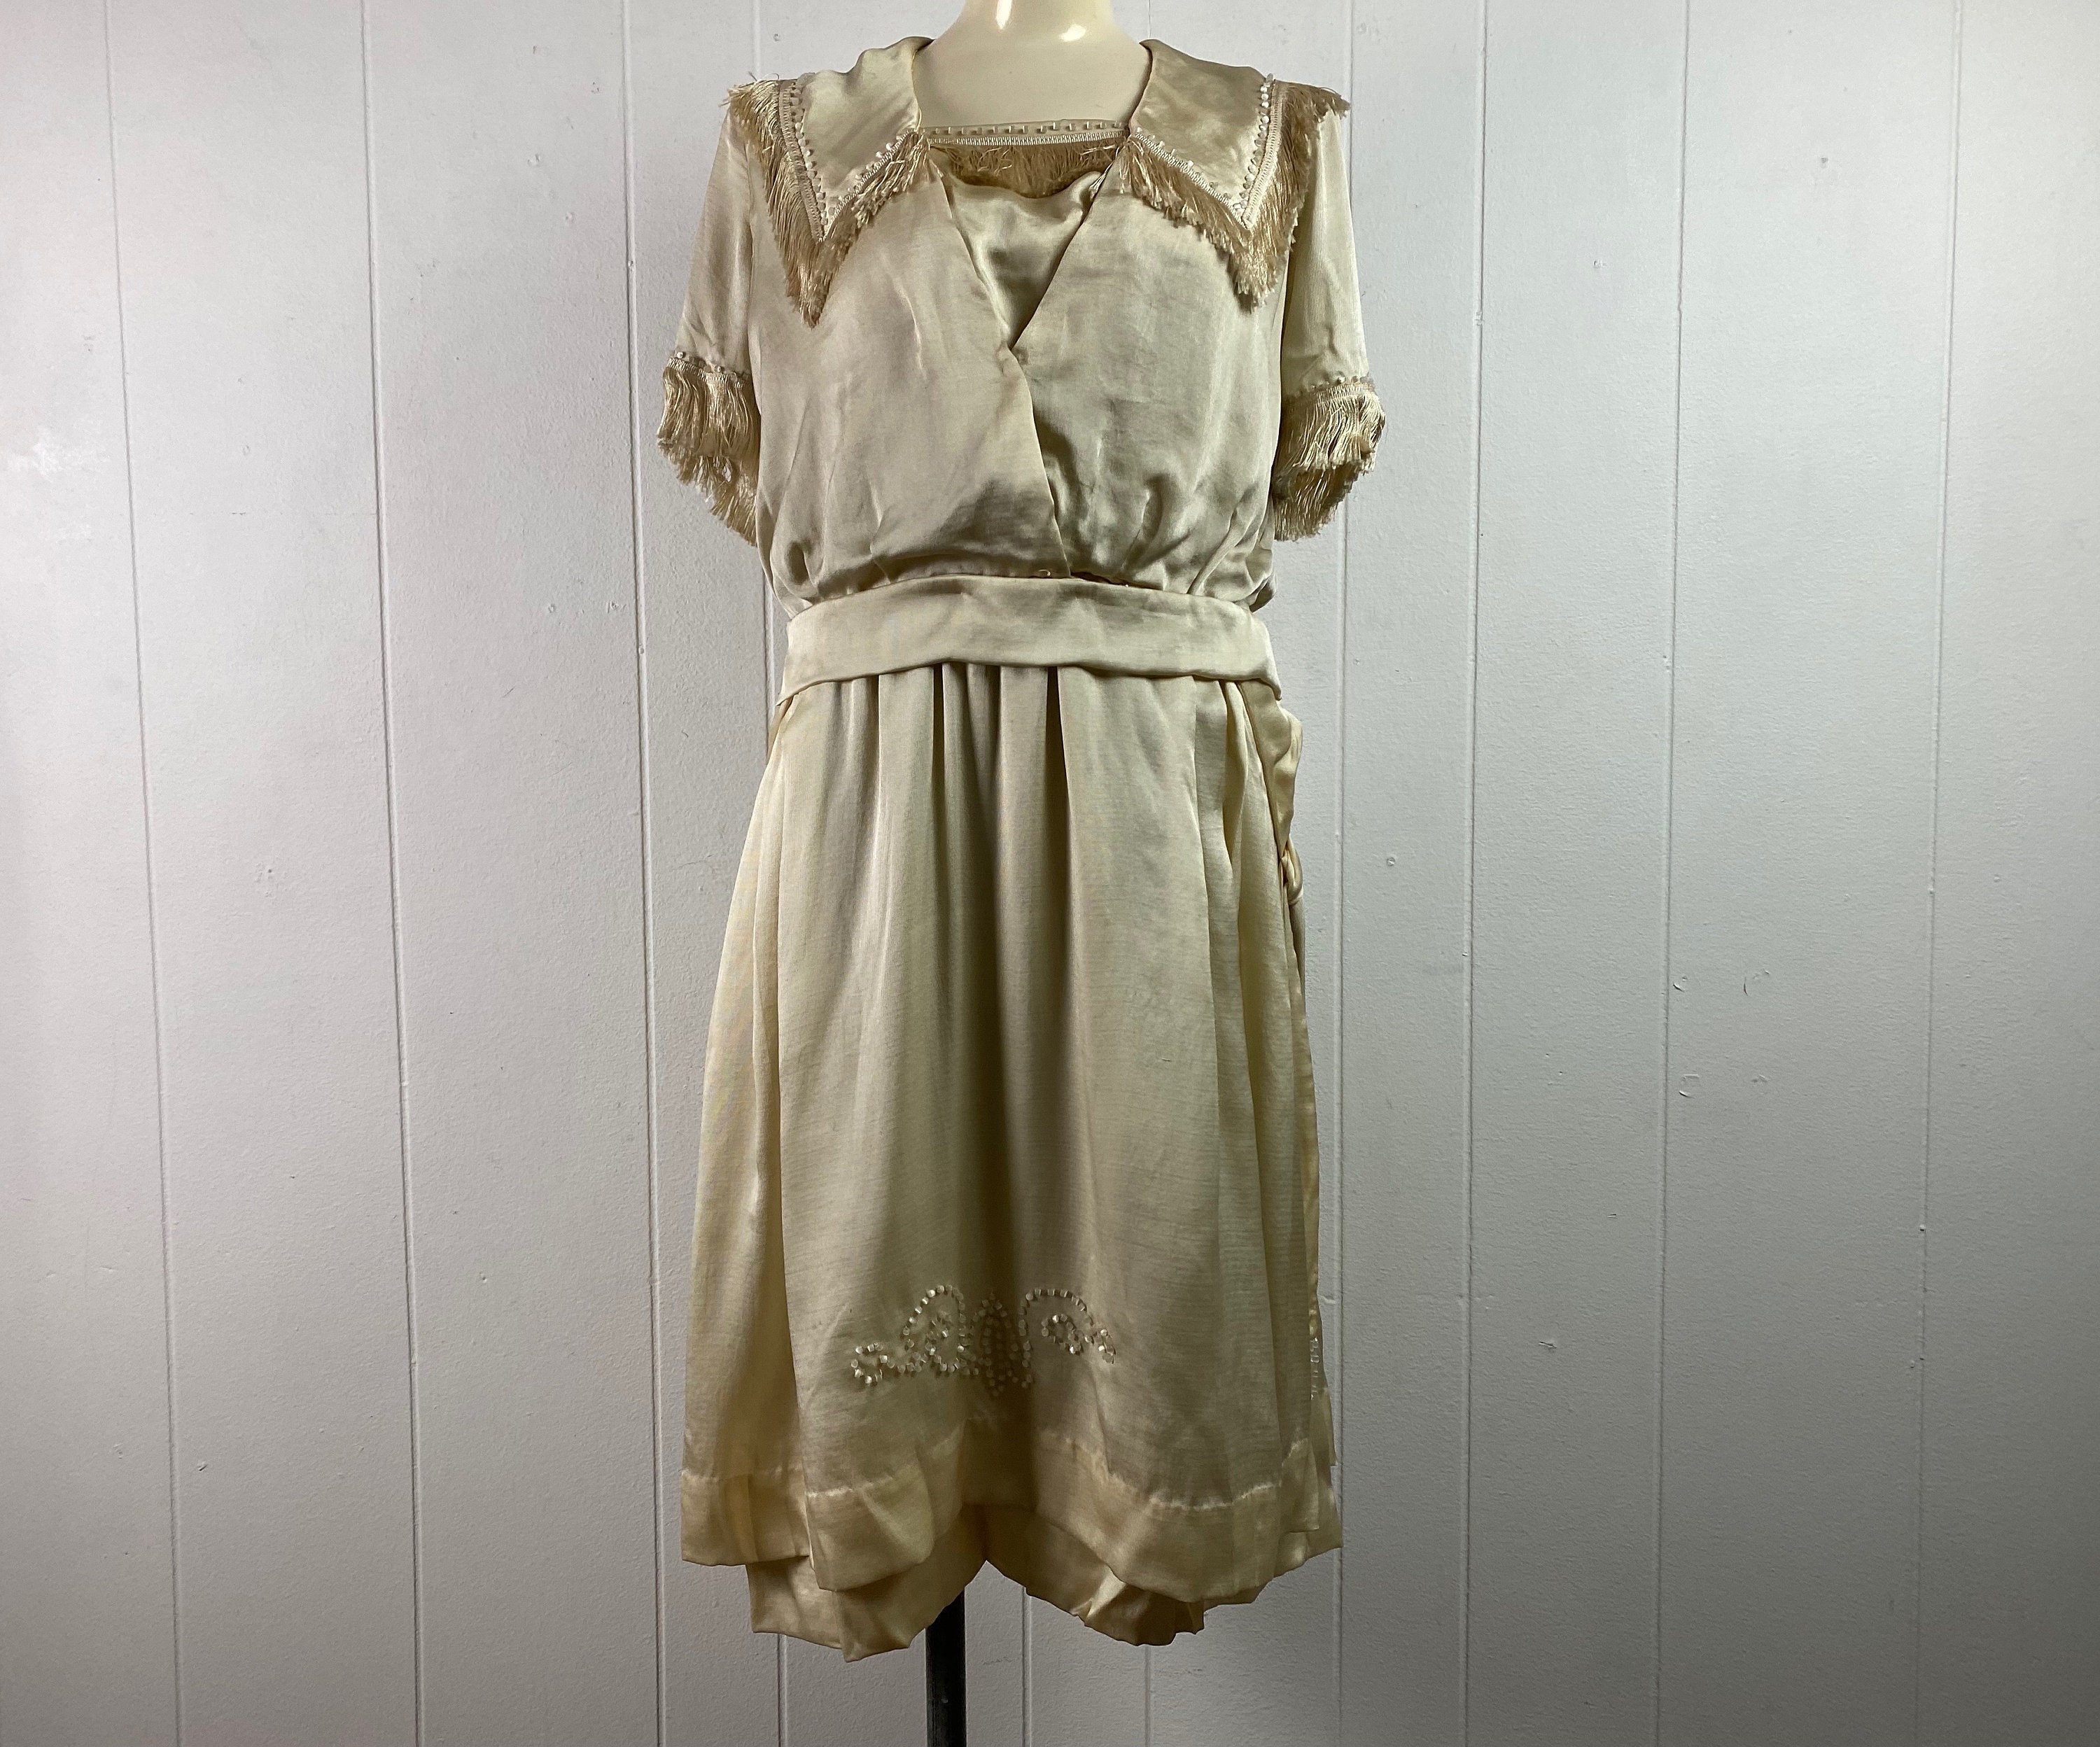 Real Vintage Search Engine Vintage Dress, 1910S Dress 1920S Flapper Art Deco Beaded Vintage Clothing, White Silk, Size Medium $249.00 AT vintagedancer.com